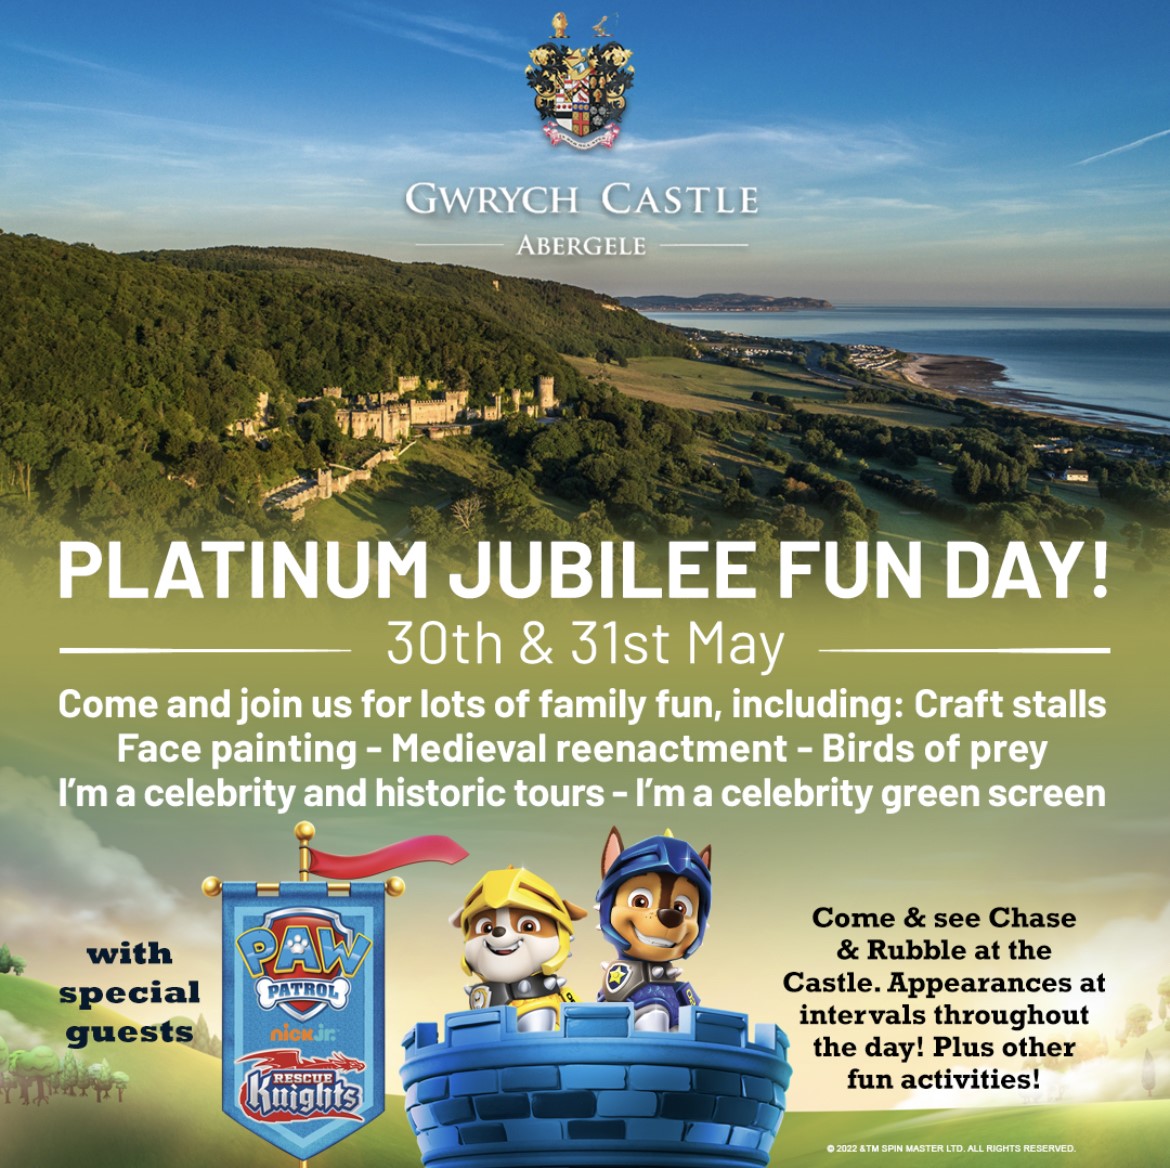 Gwrych Castle Jubilee weekend celebrations with Paw Patrol